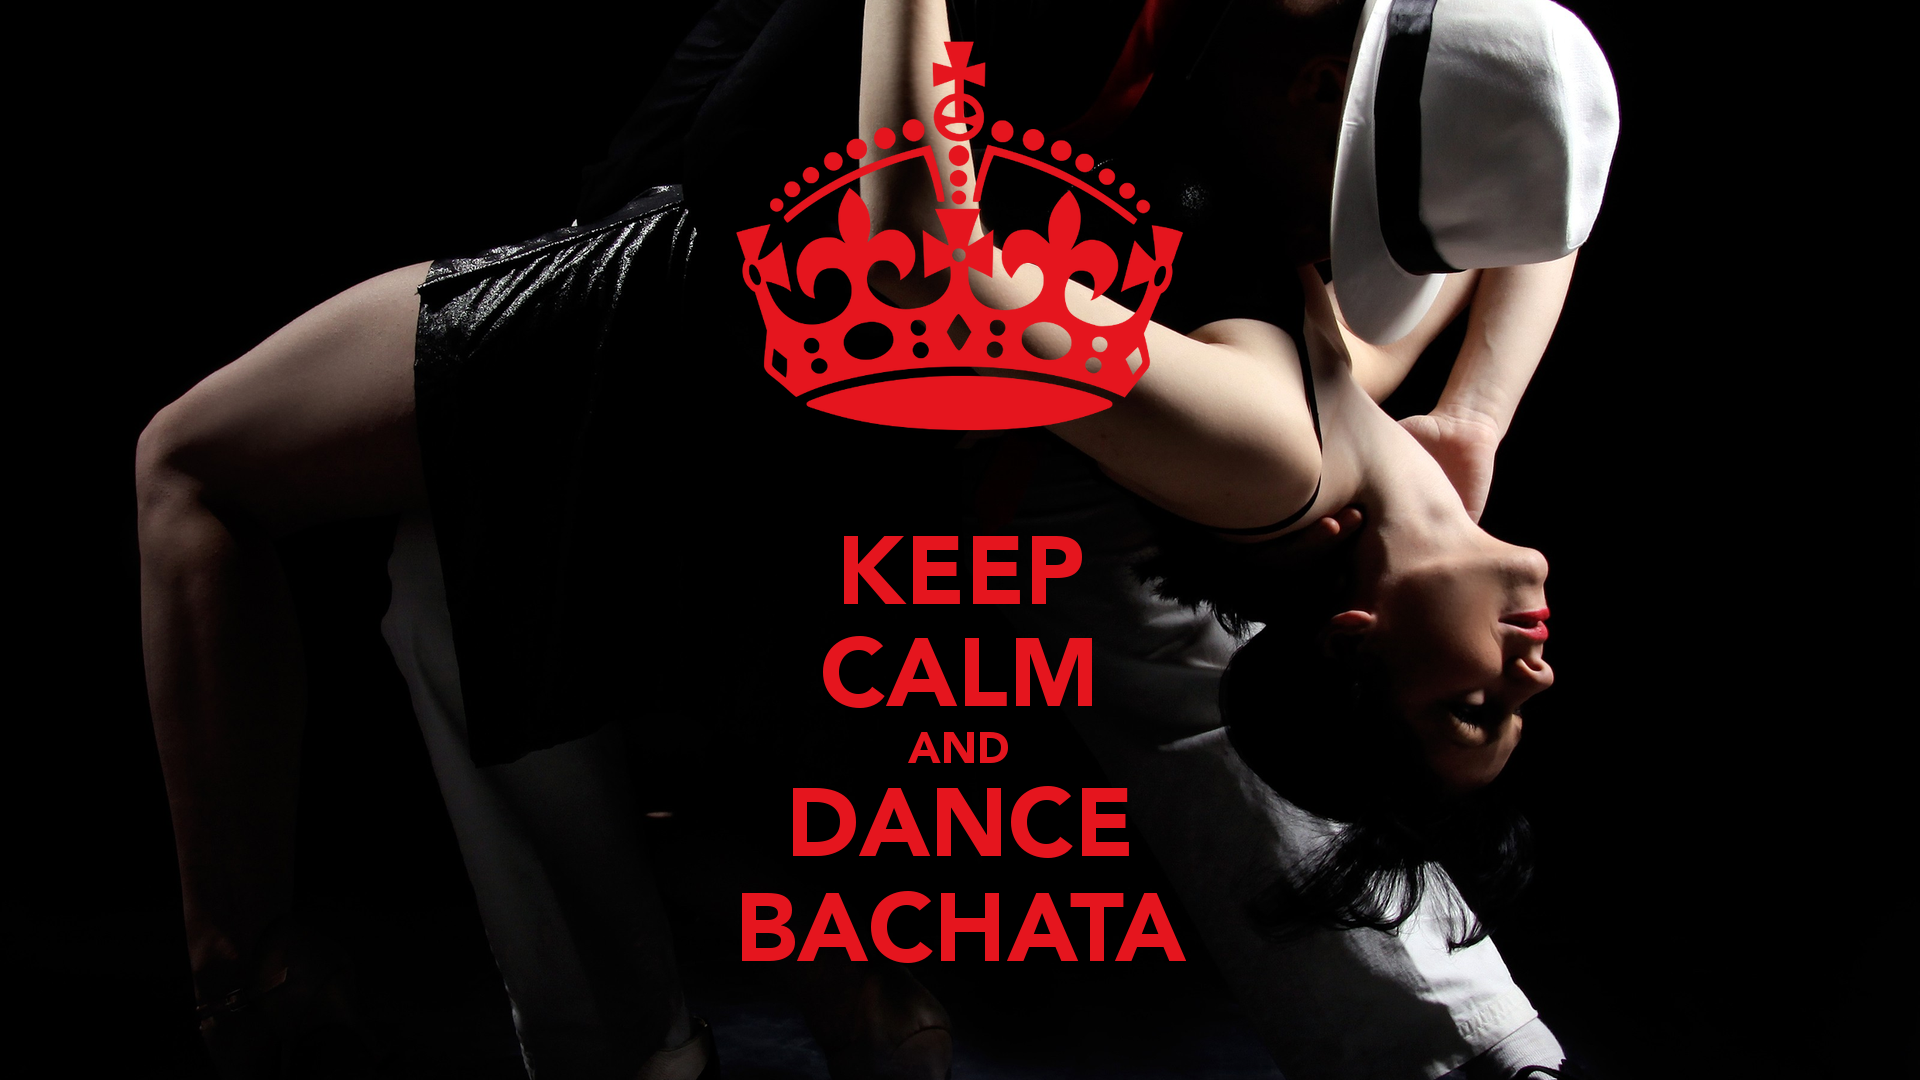 Bachata Dance Quotes. QuotesGram